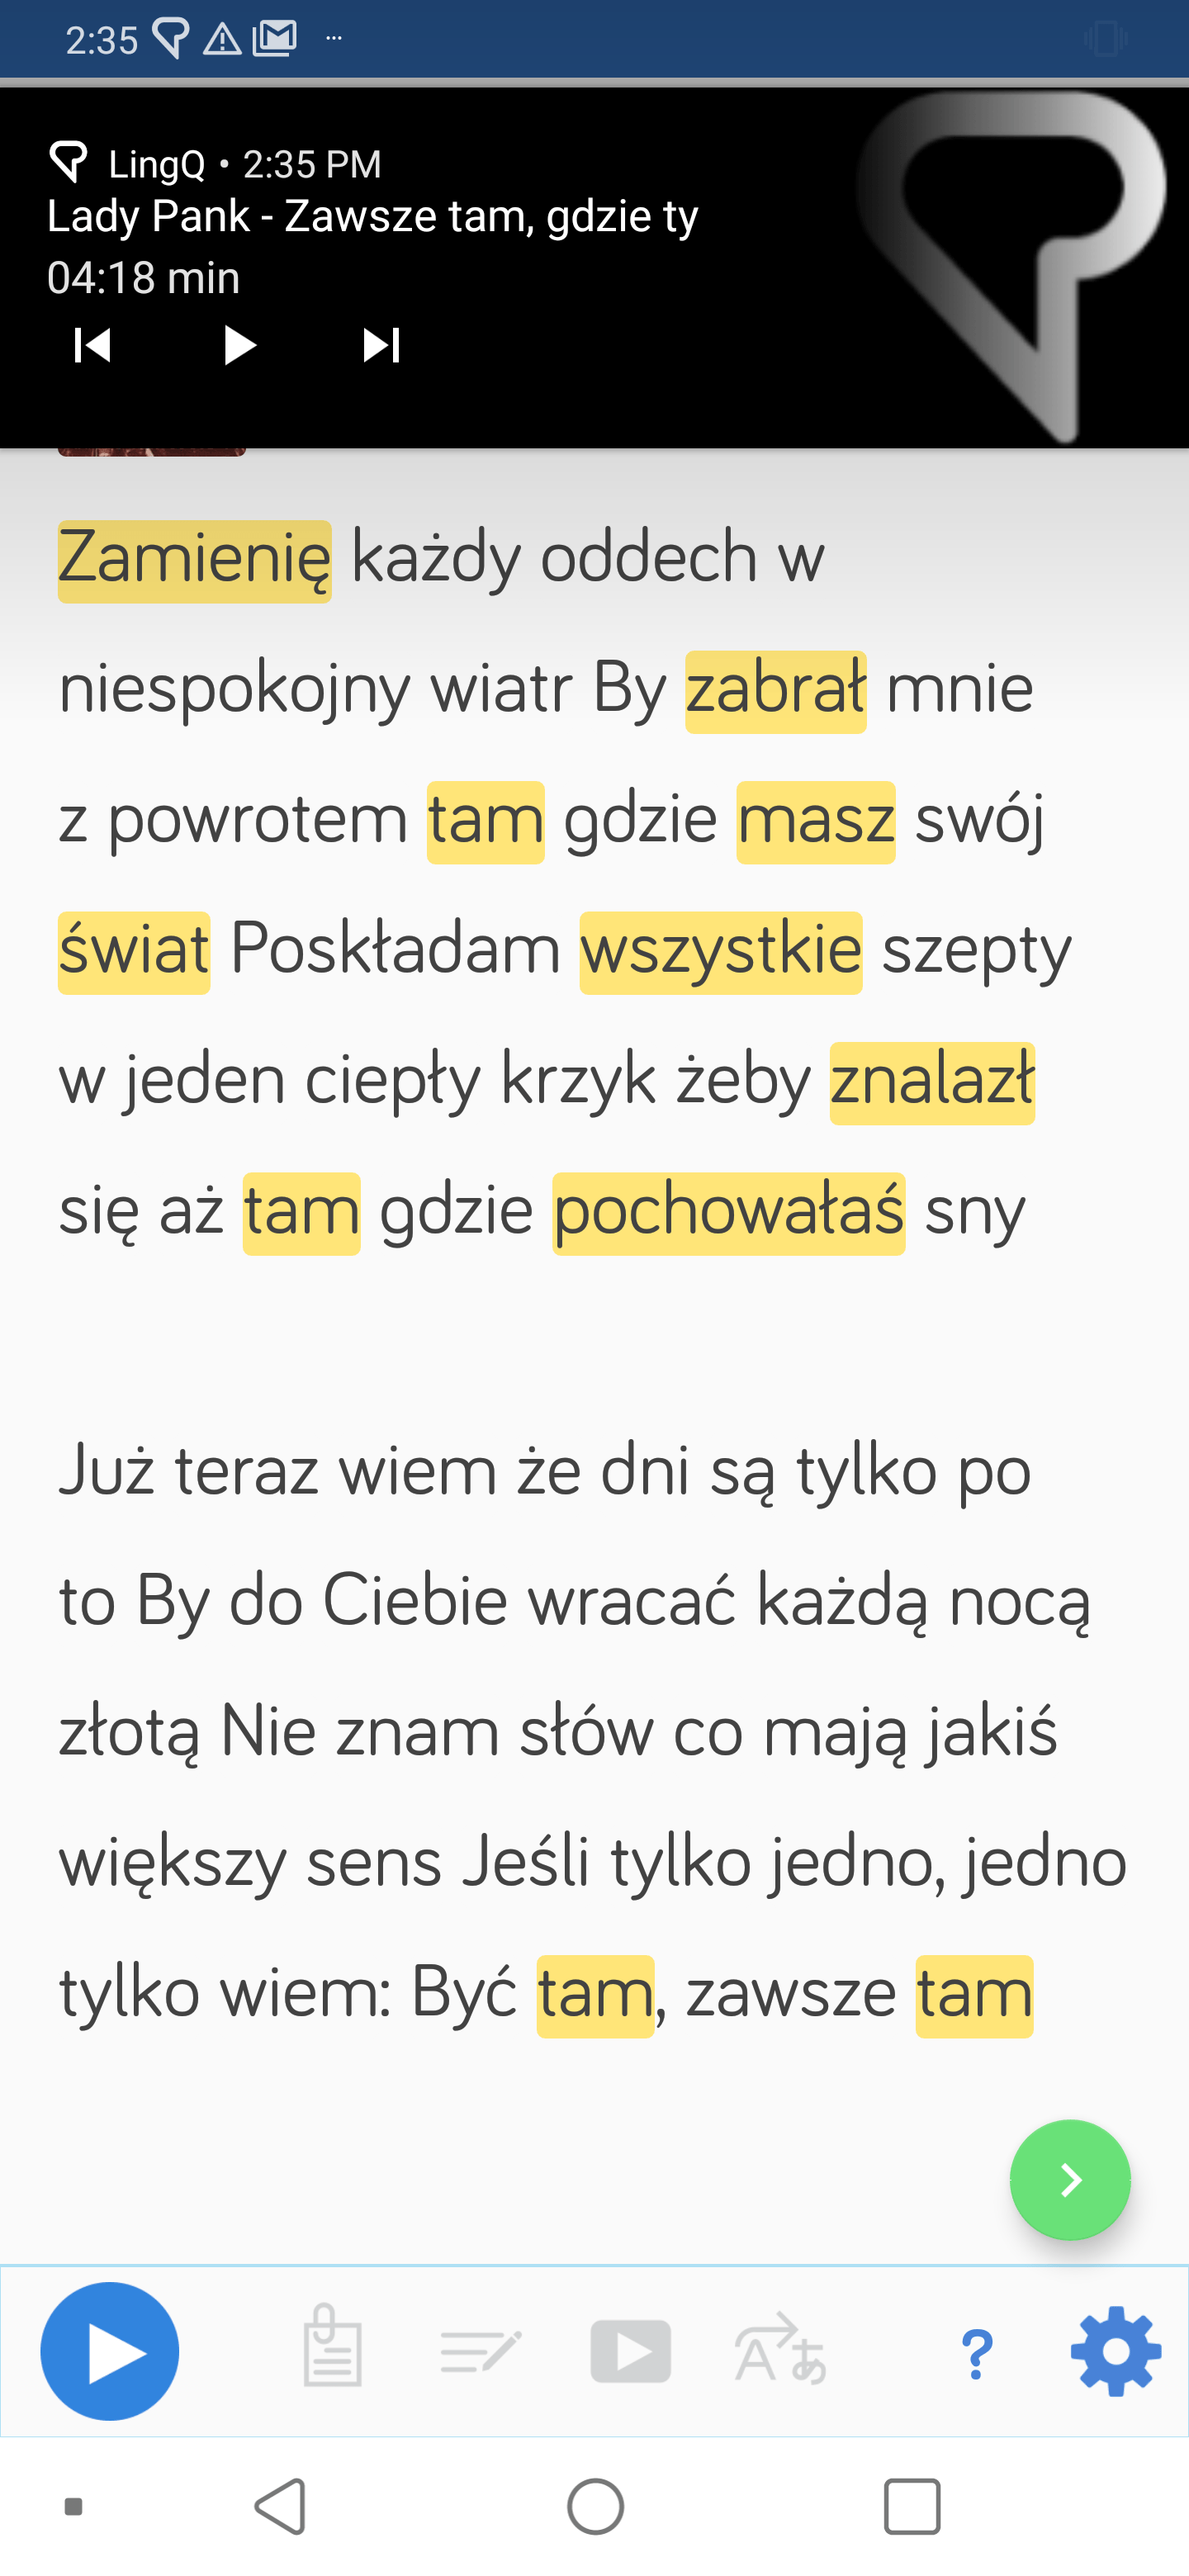 Learn Polish on the LingQ mobile app